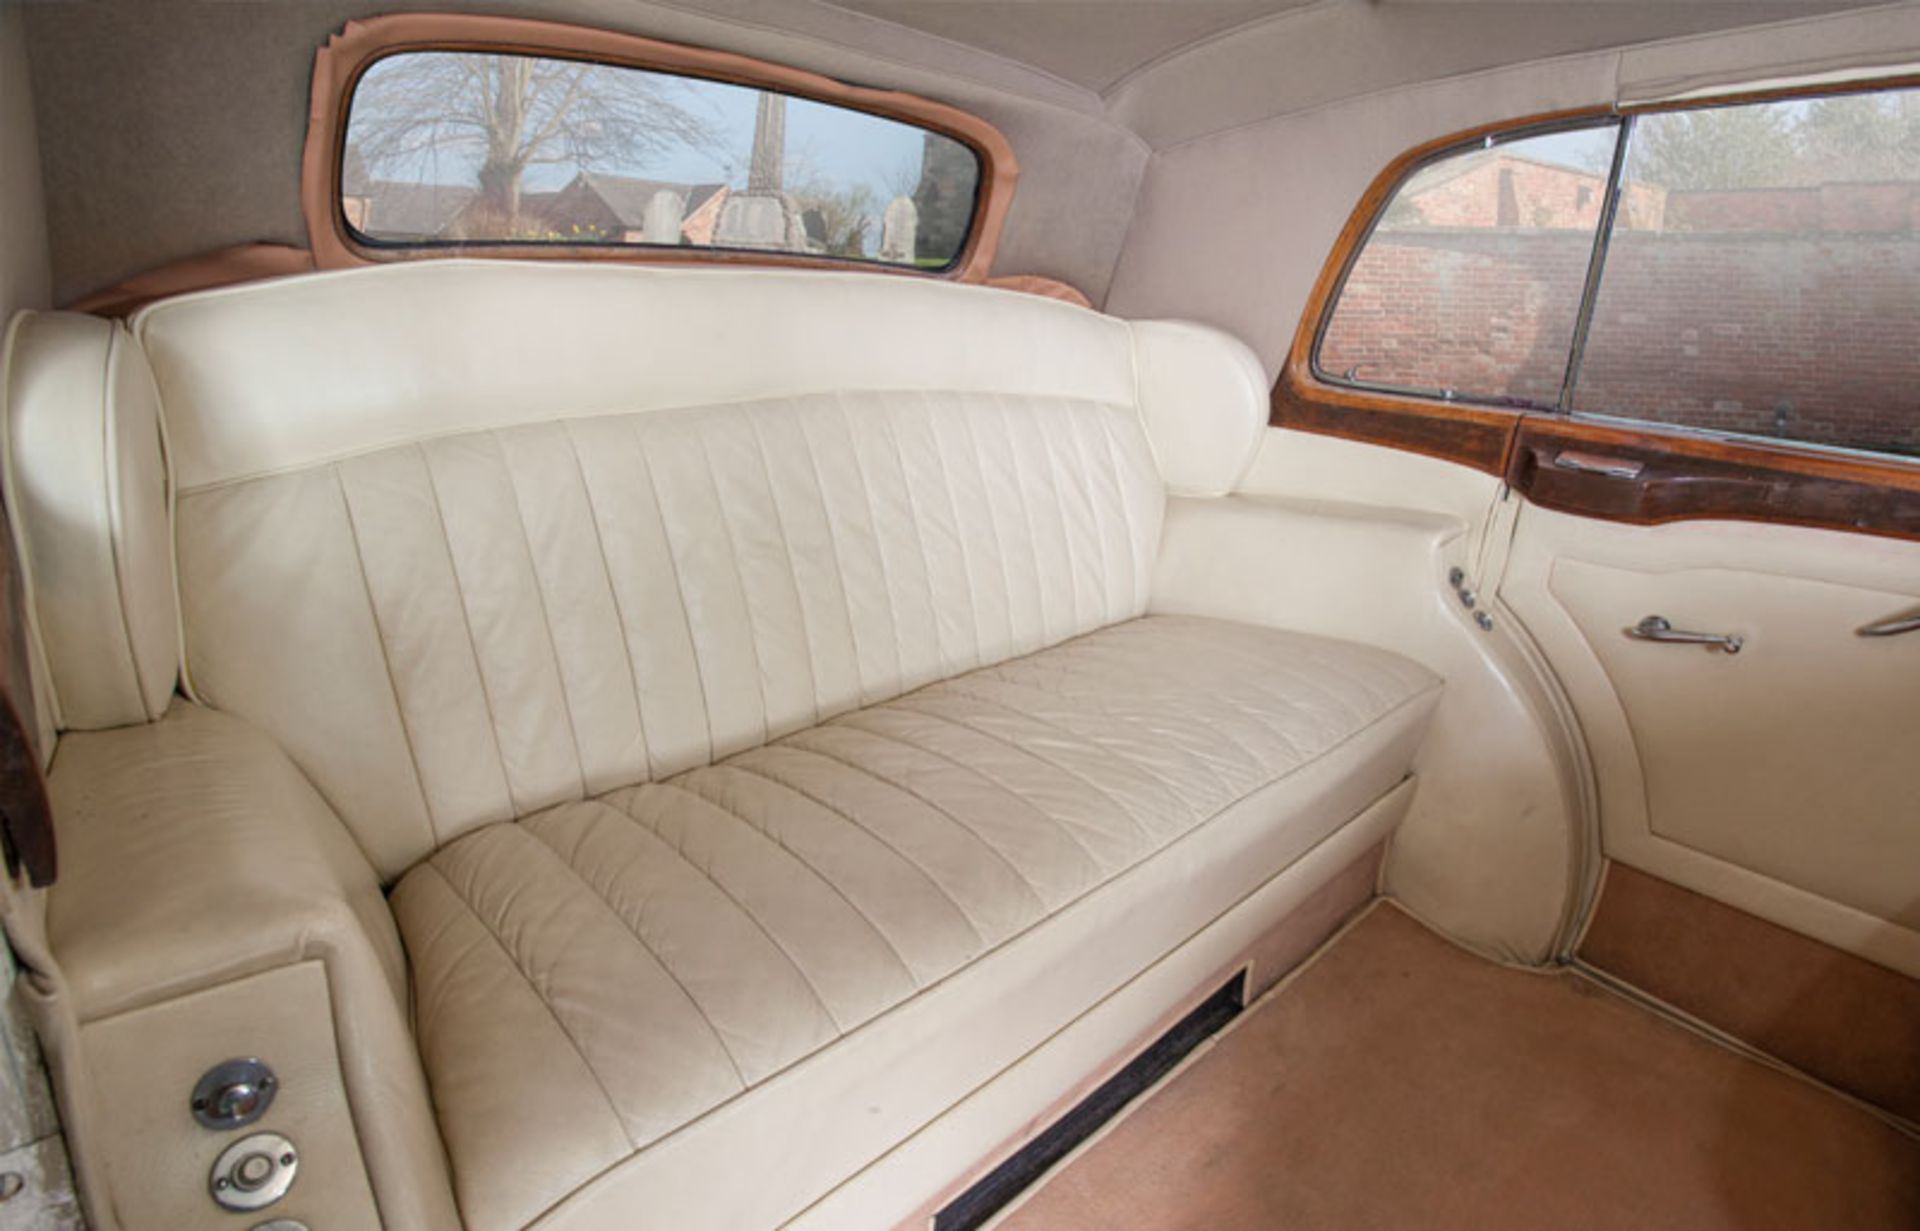 (1948) Rolls Royce Pre-War Wraith, 6 Passenger Limousine (Ivory) - NO VAT - Image 4 of 8